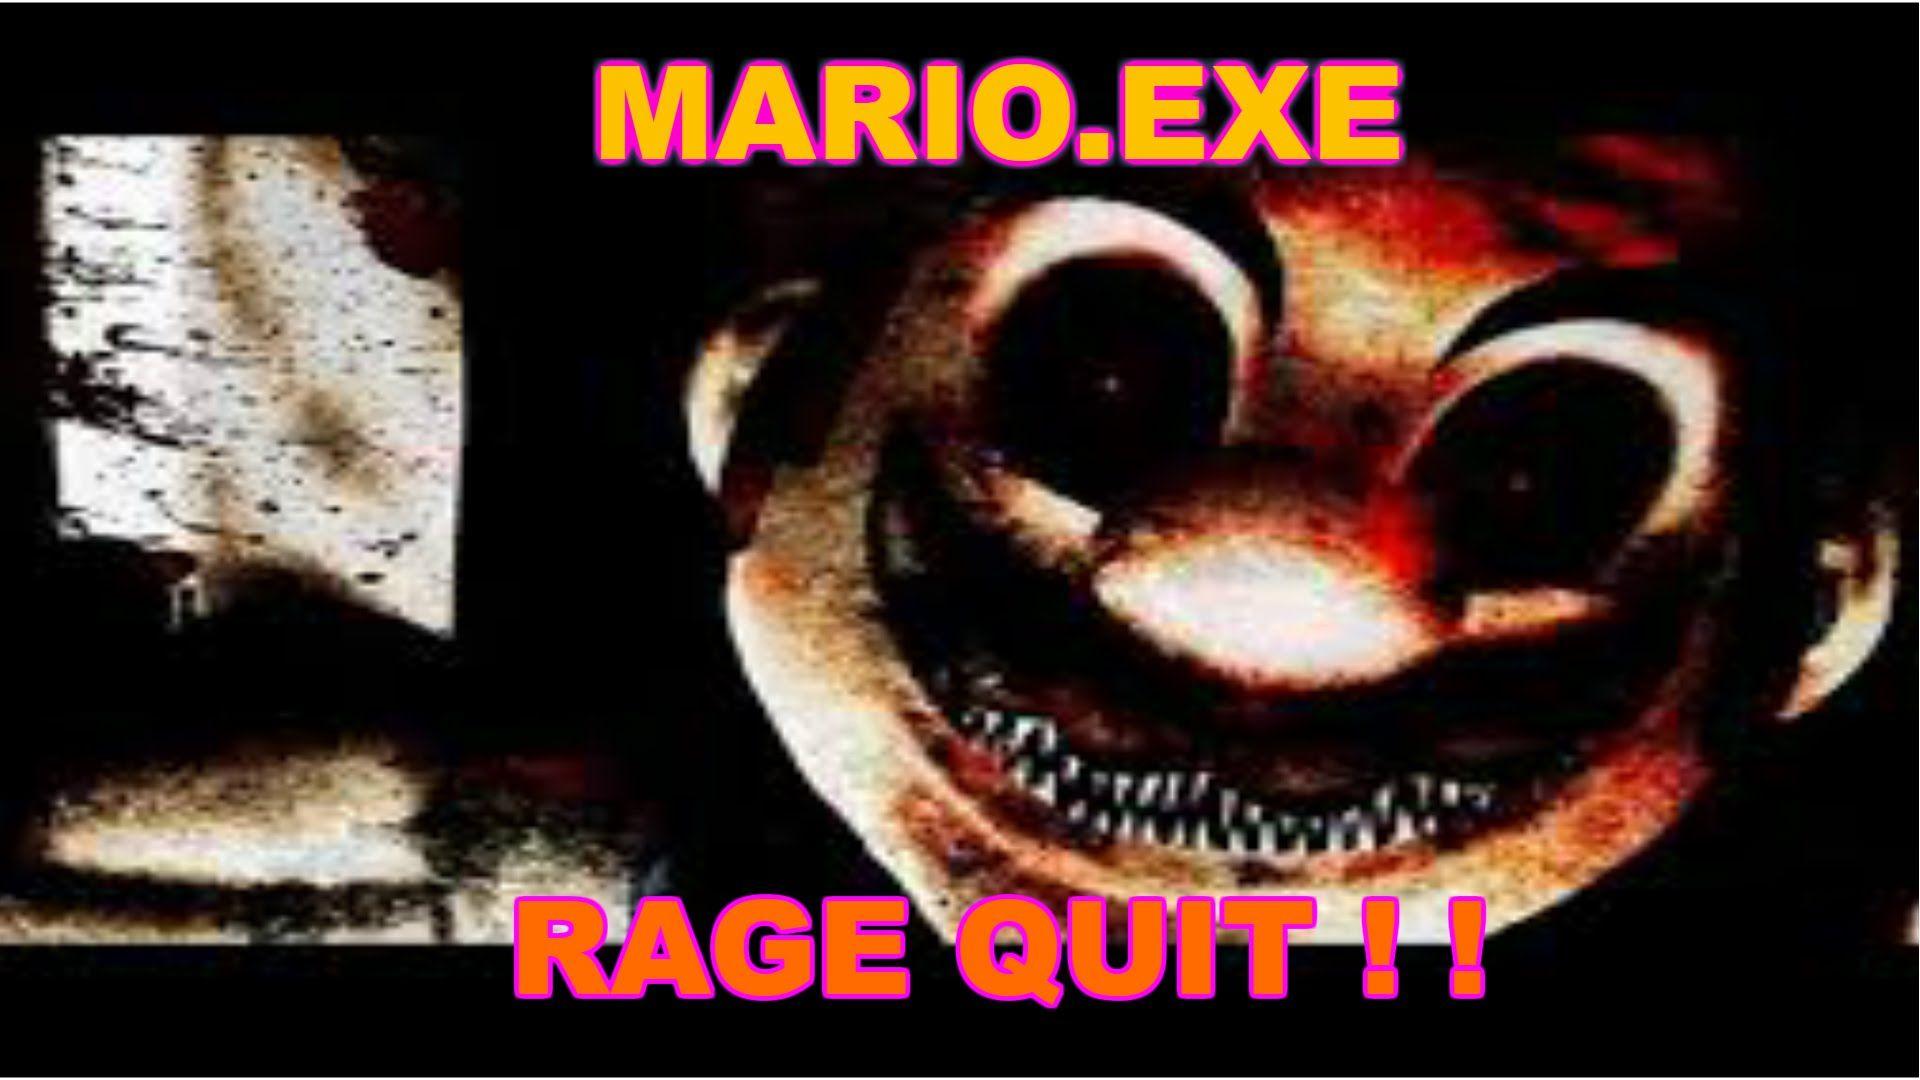 HAHA epic fail mario.exe. LatestGames. Pc gamer, Rage quit